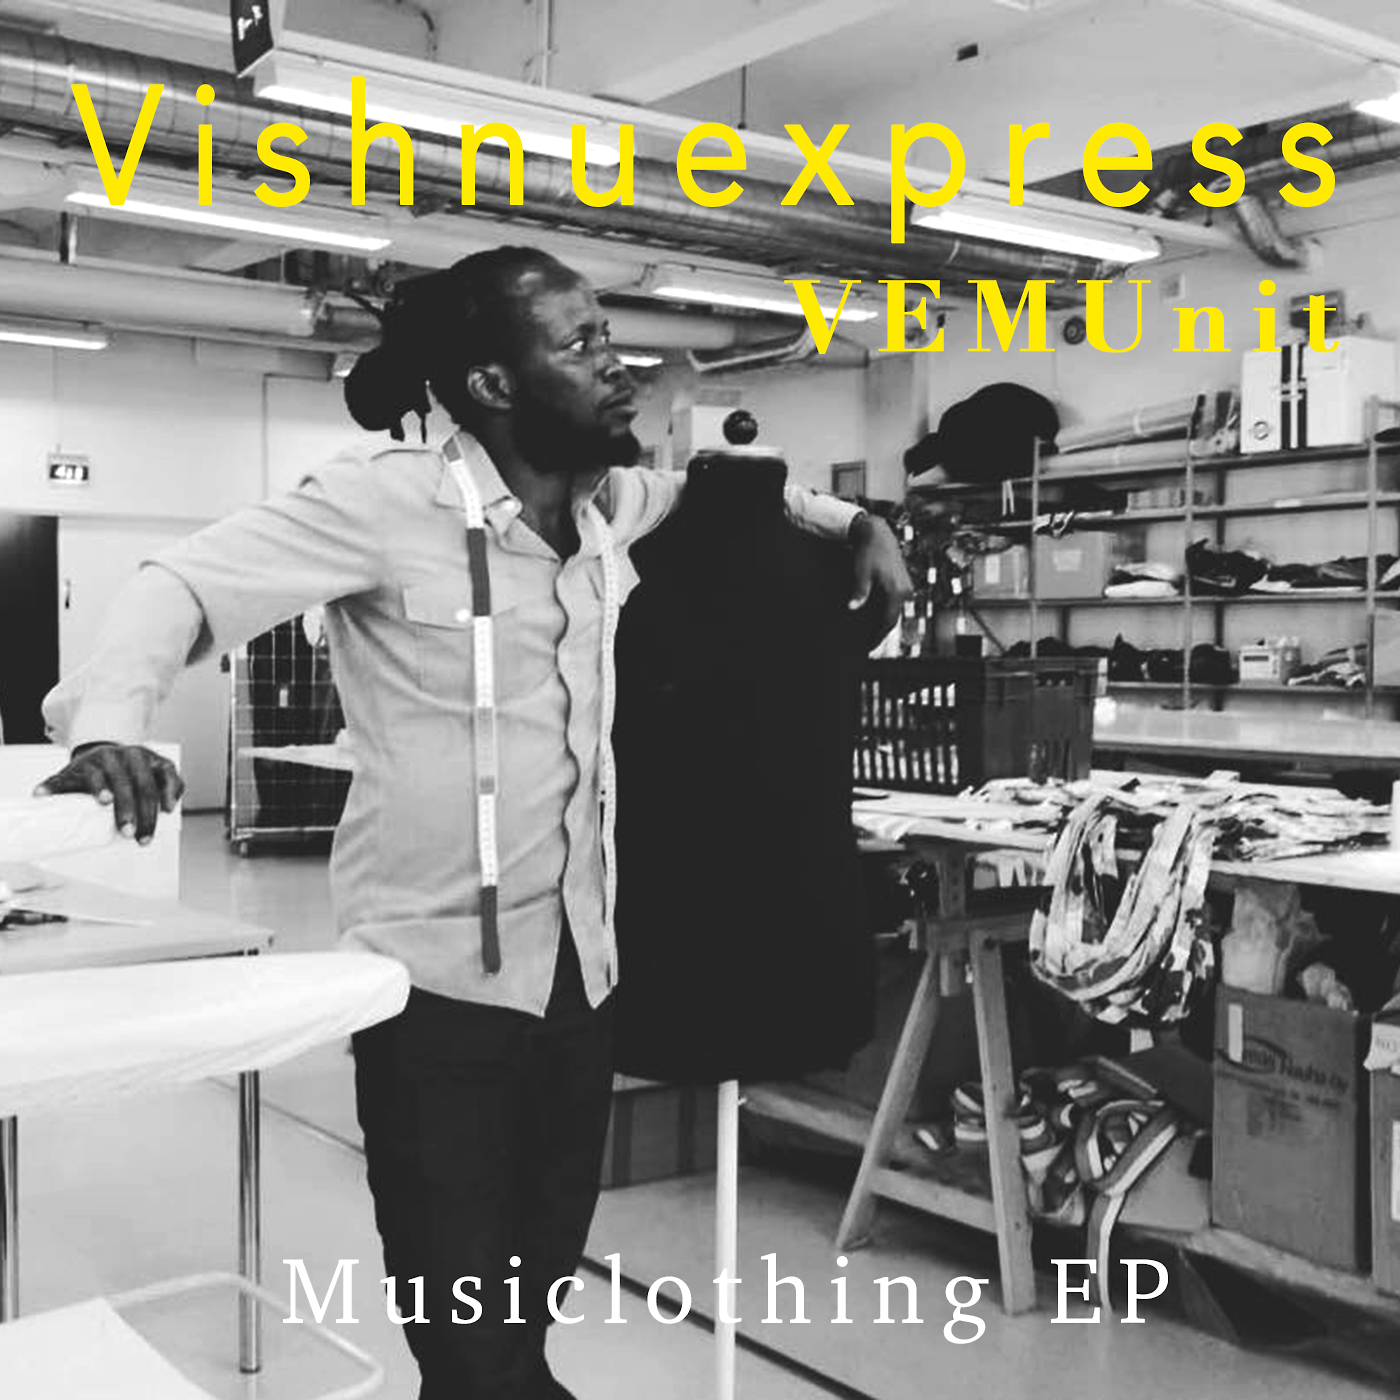 VishnuExpress. VEMUnit. Musiclothing